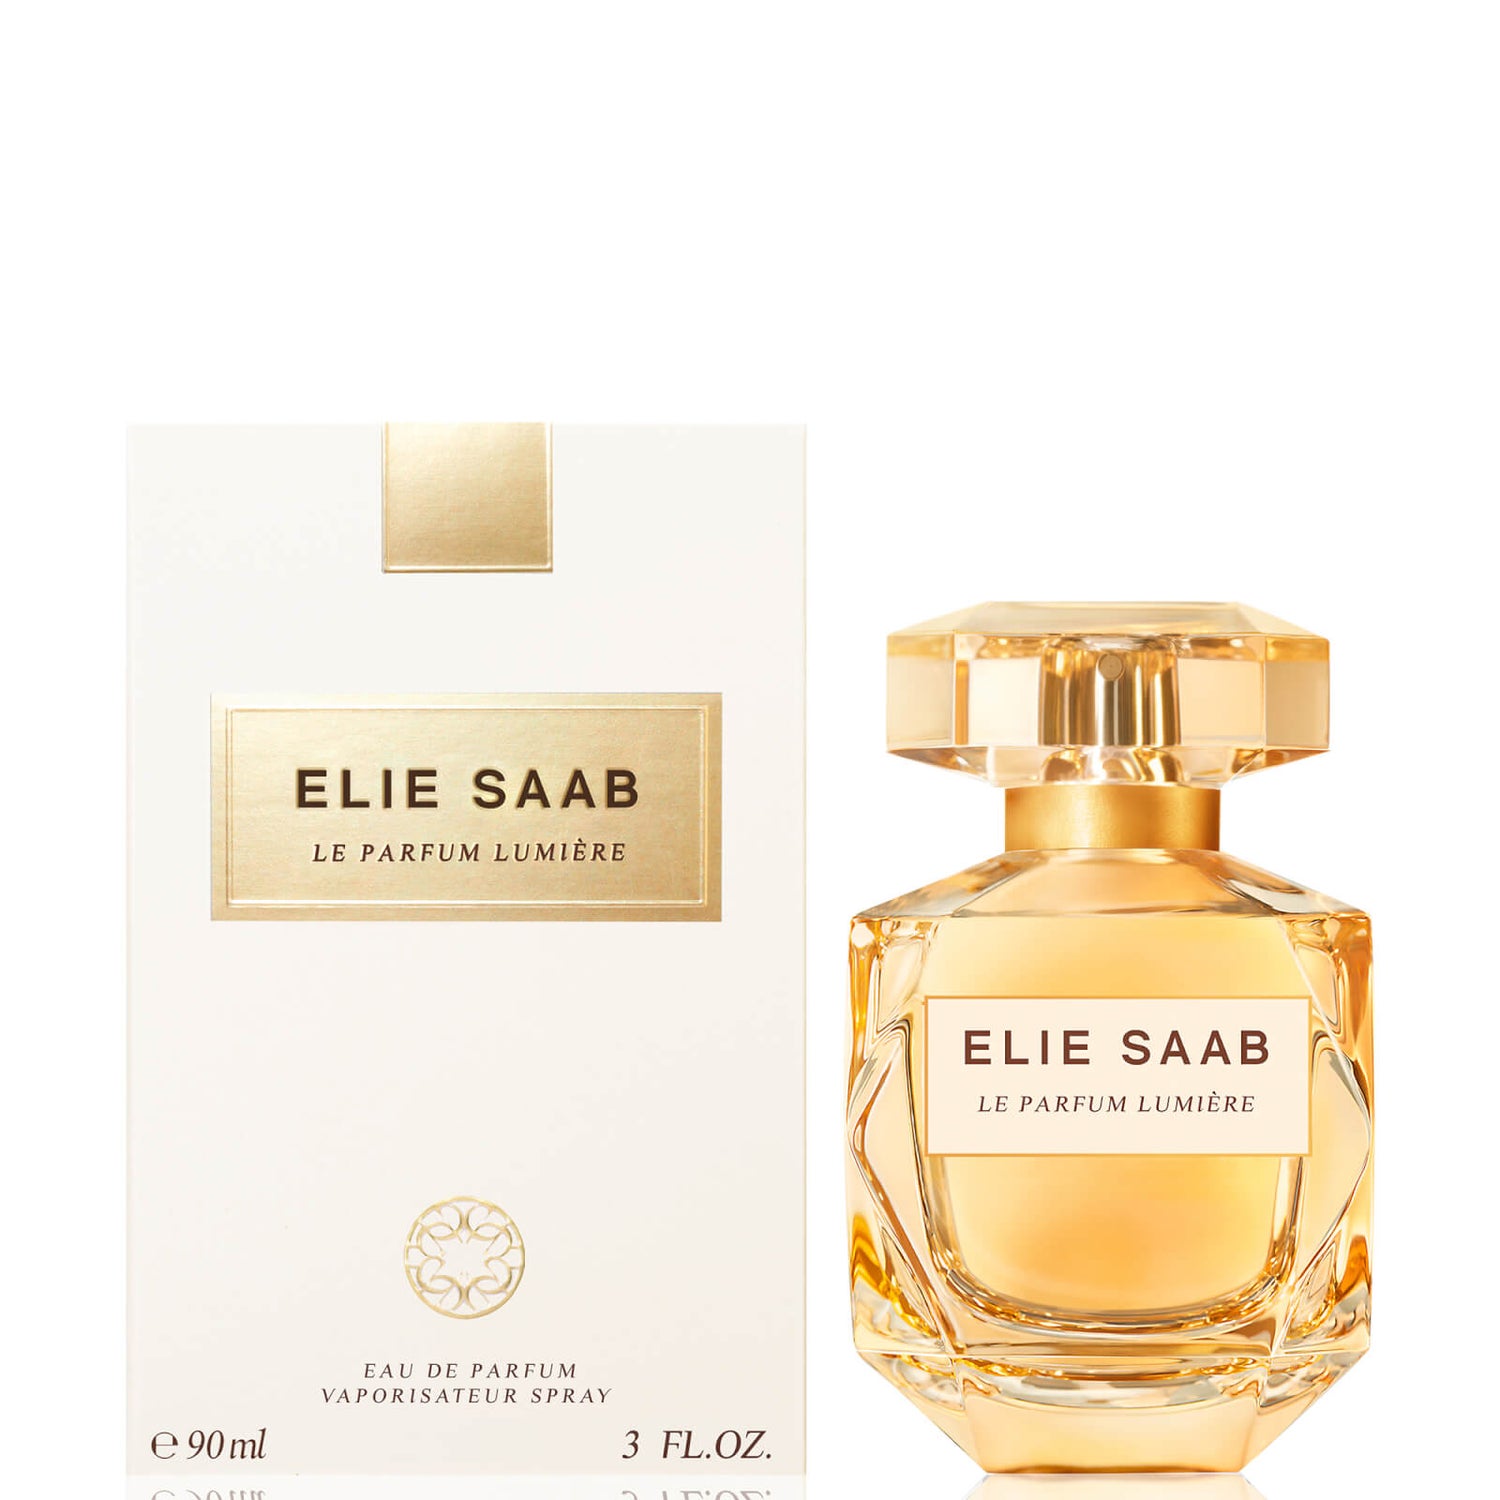 Elie Saab Le Parfum Lumiere Eau de Parfum 90ml | LOOKFANTASTIC